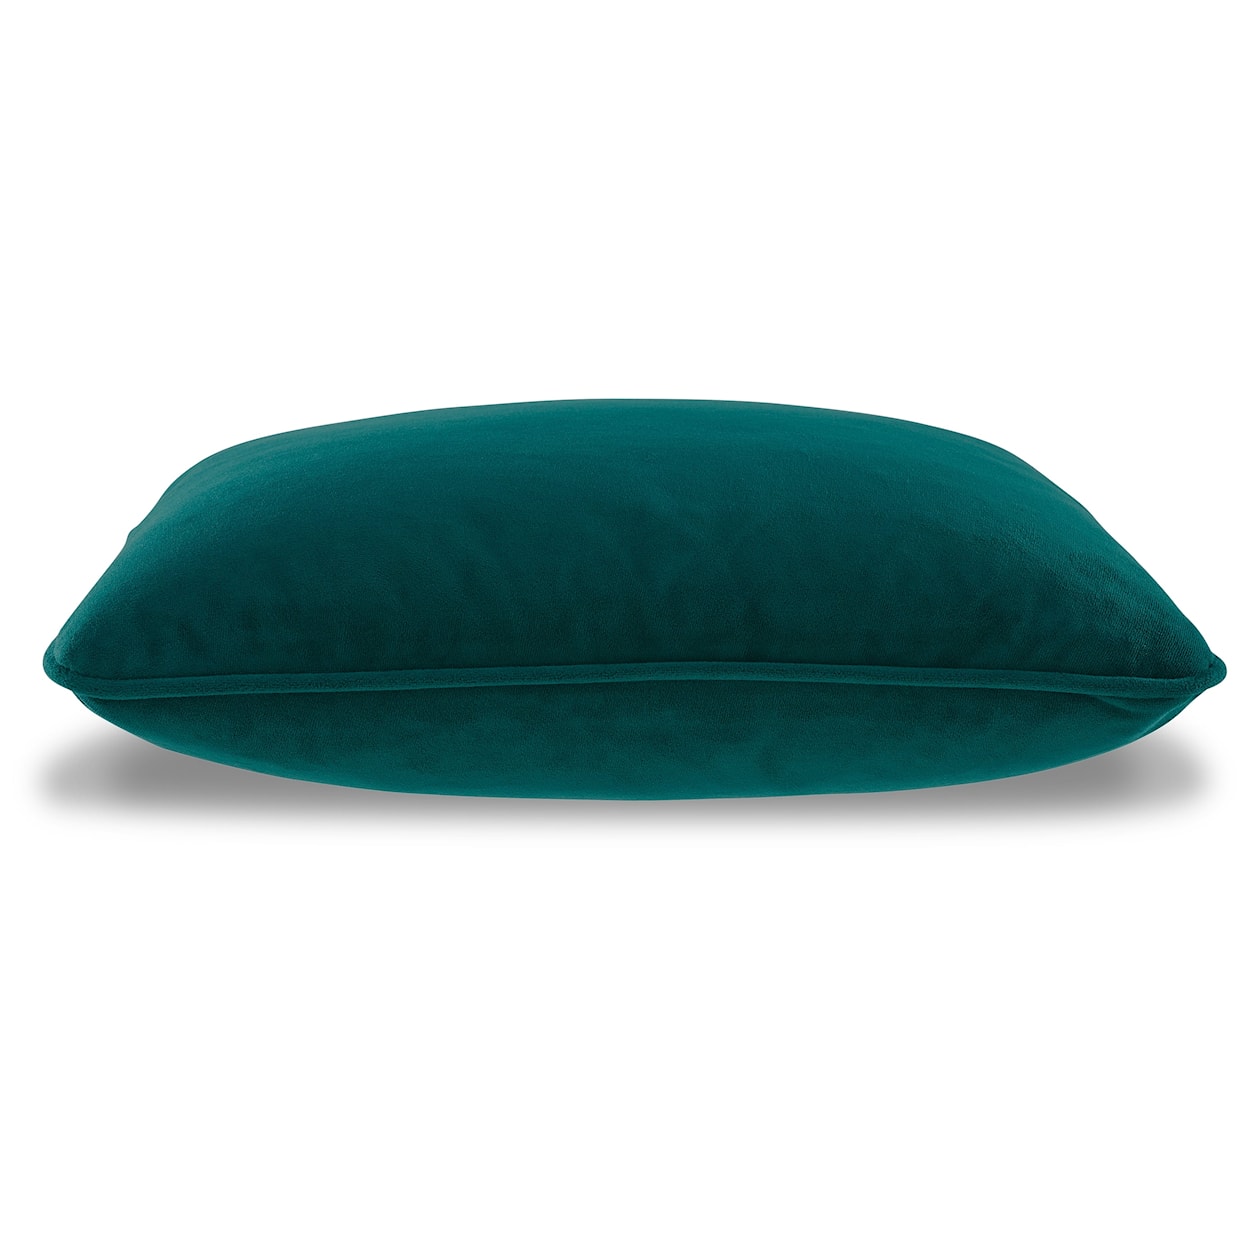 Ashley Furniture Signature Design Caygan Pillow (Set of 4)